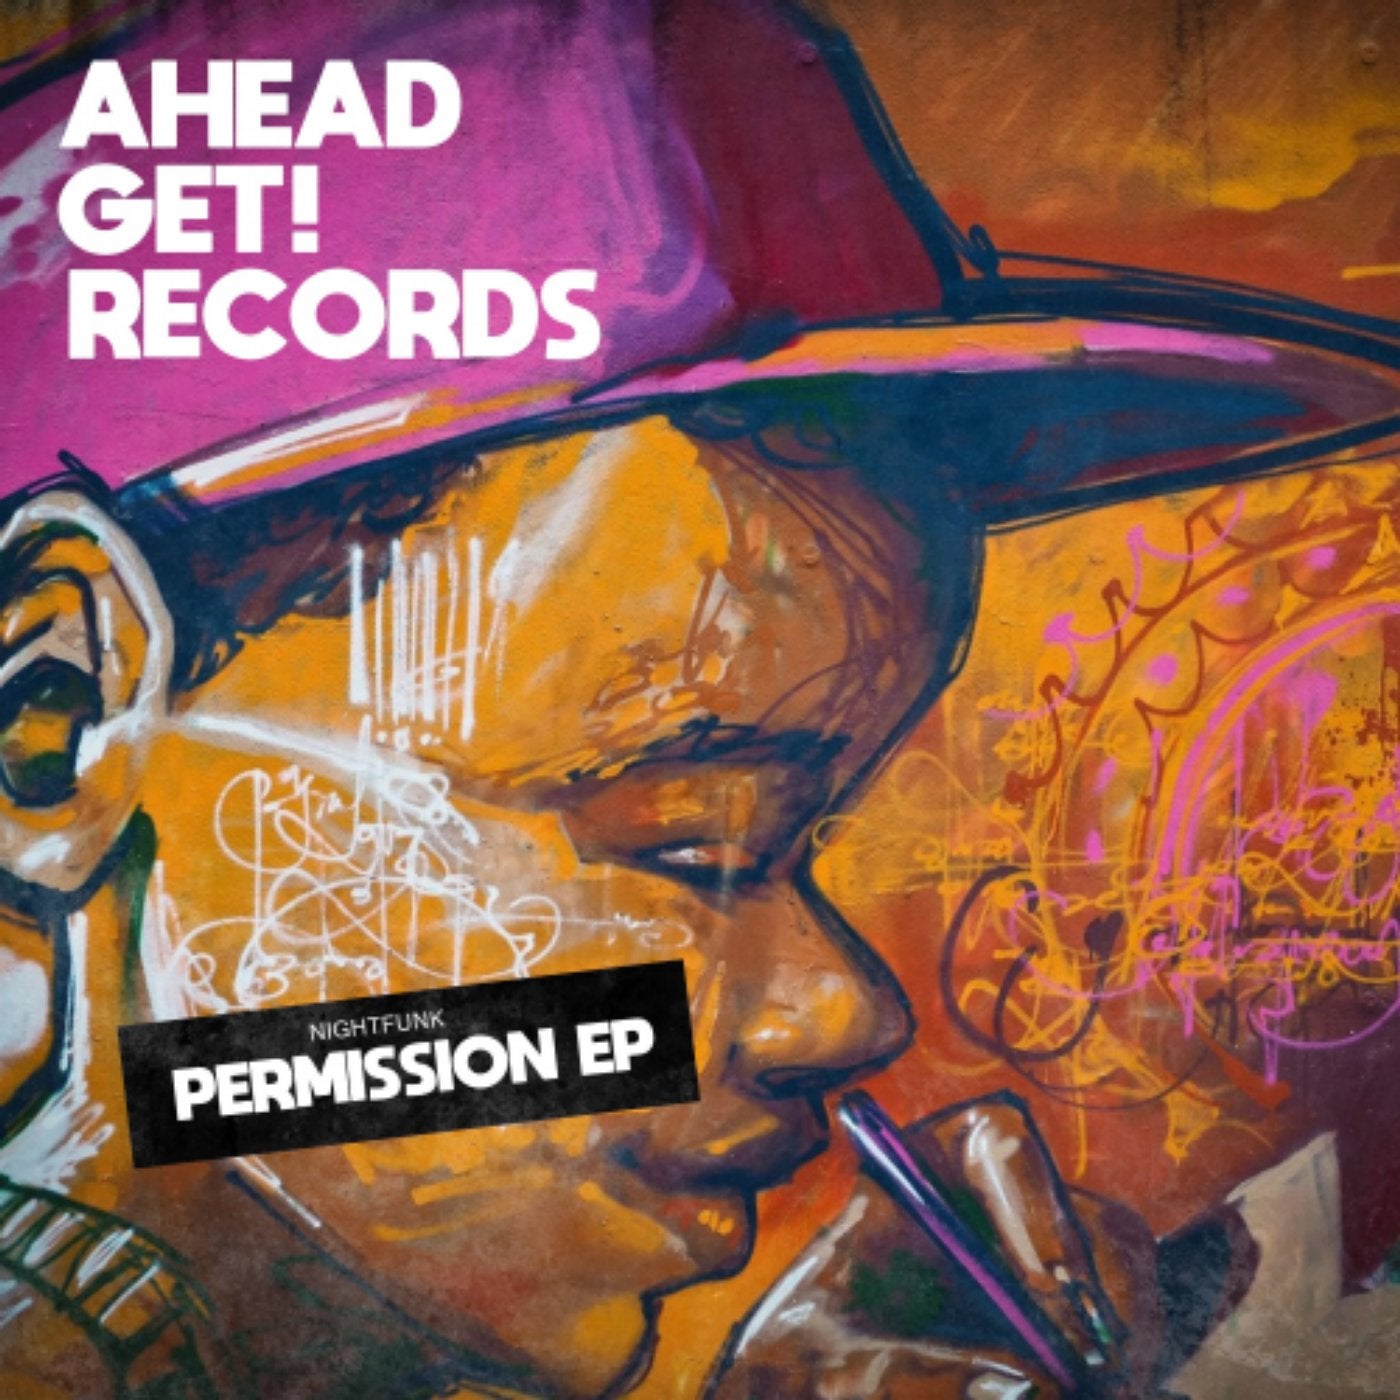 Permission EP